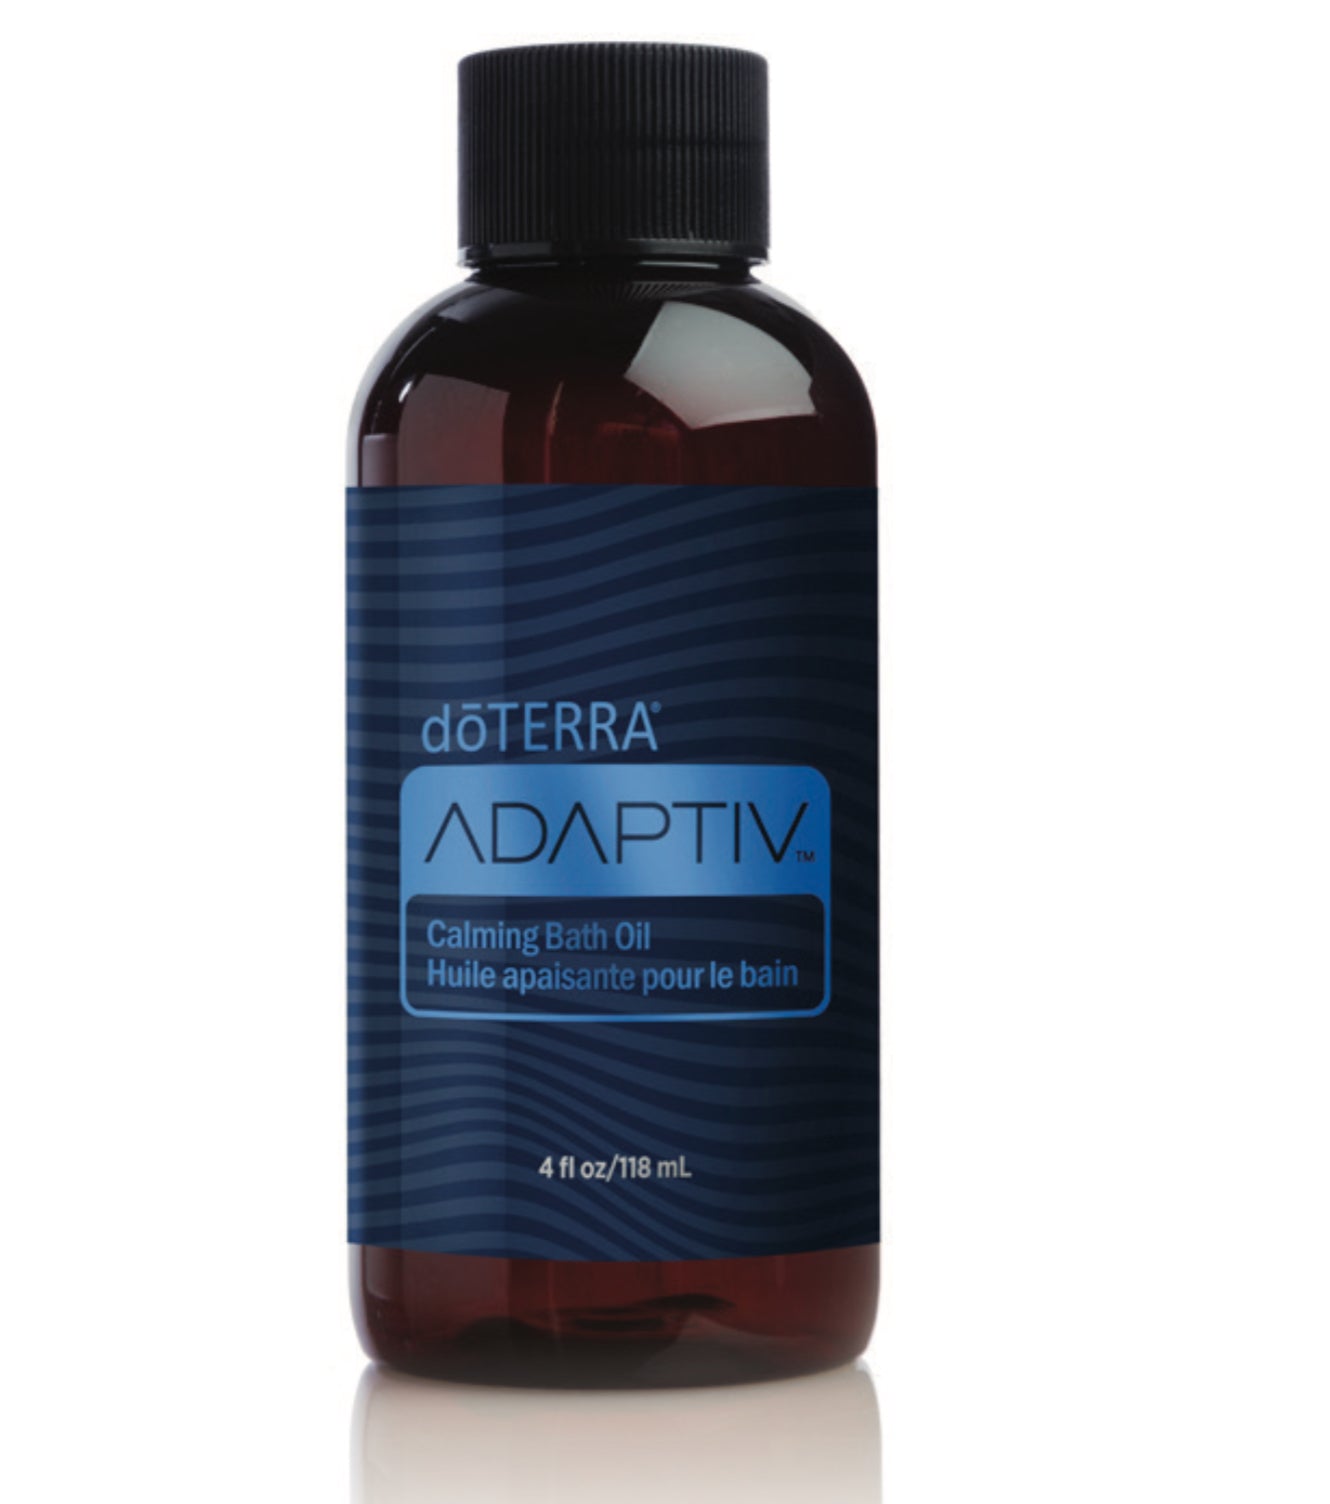 dōTERRA Adaptive Calming Bath Oil